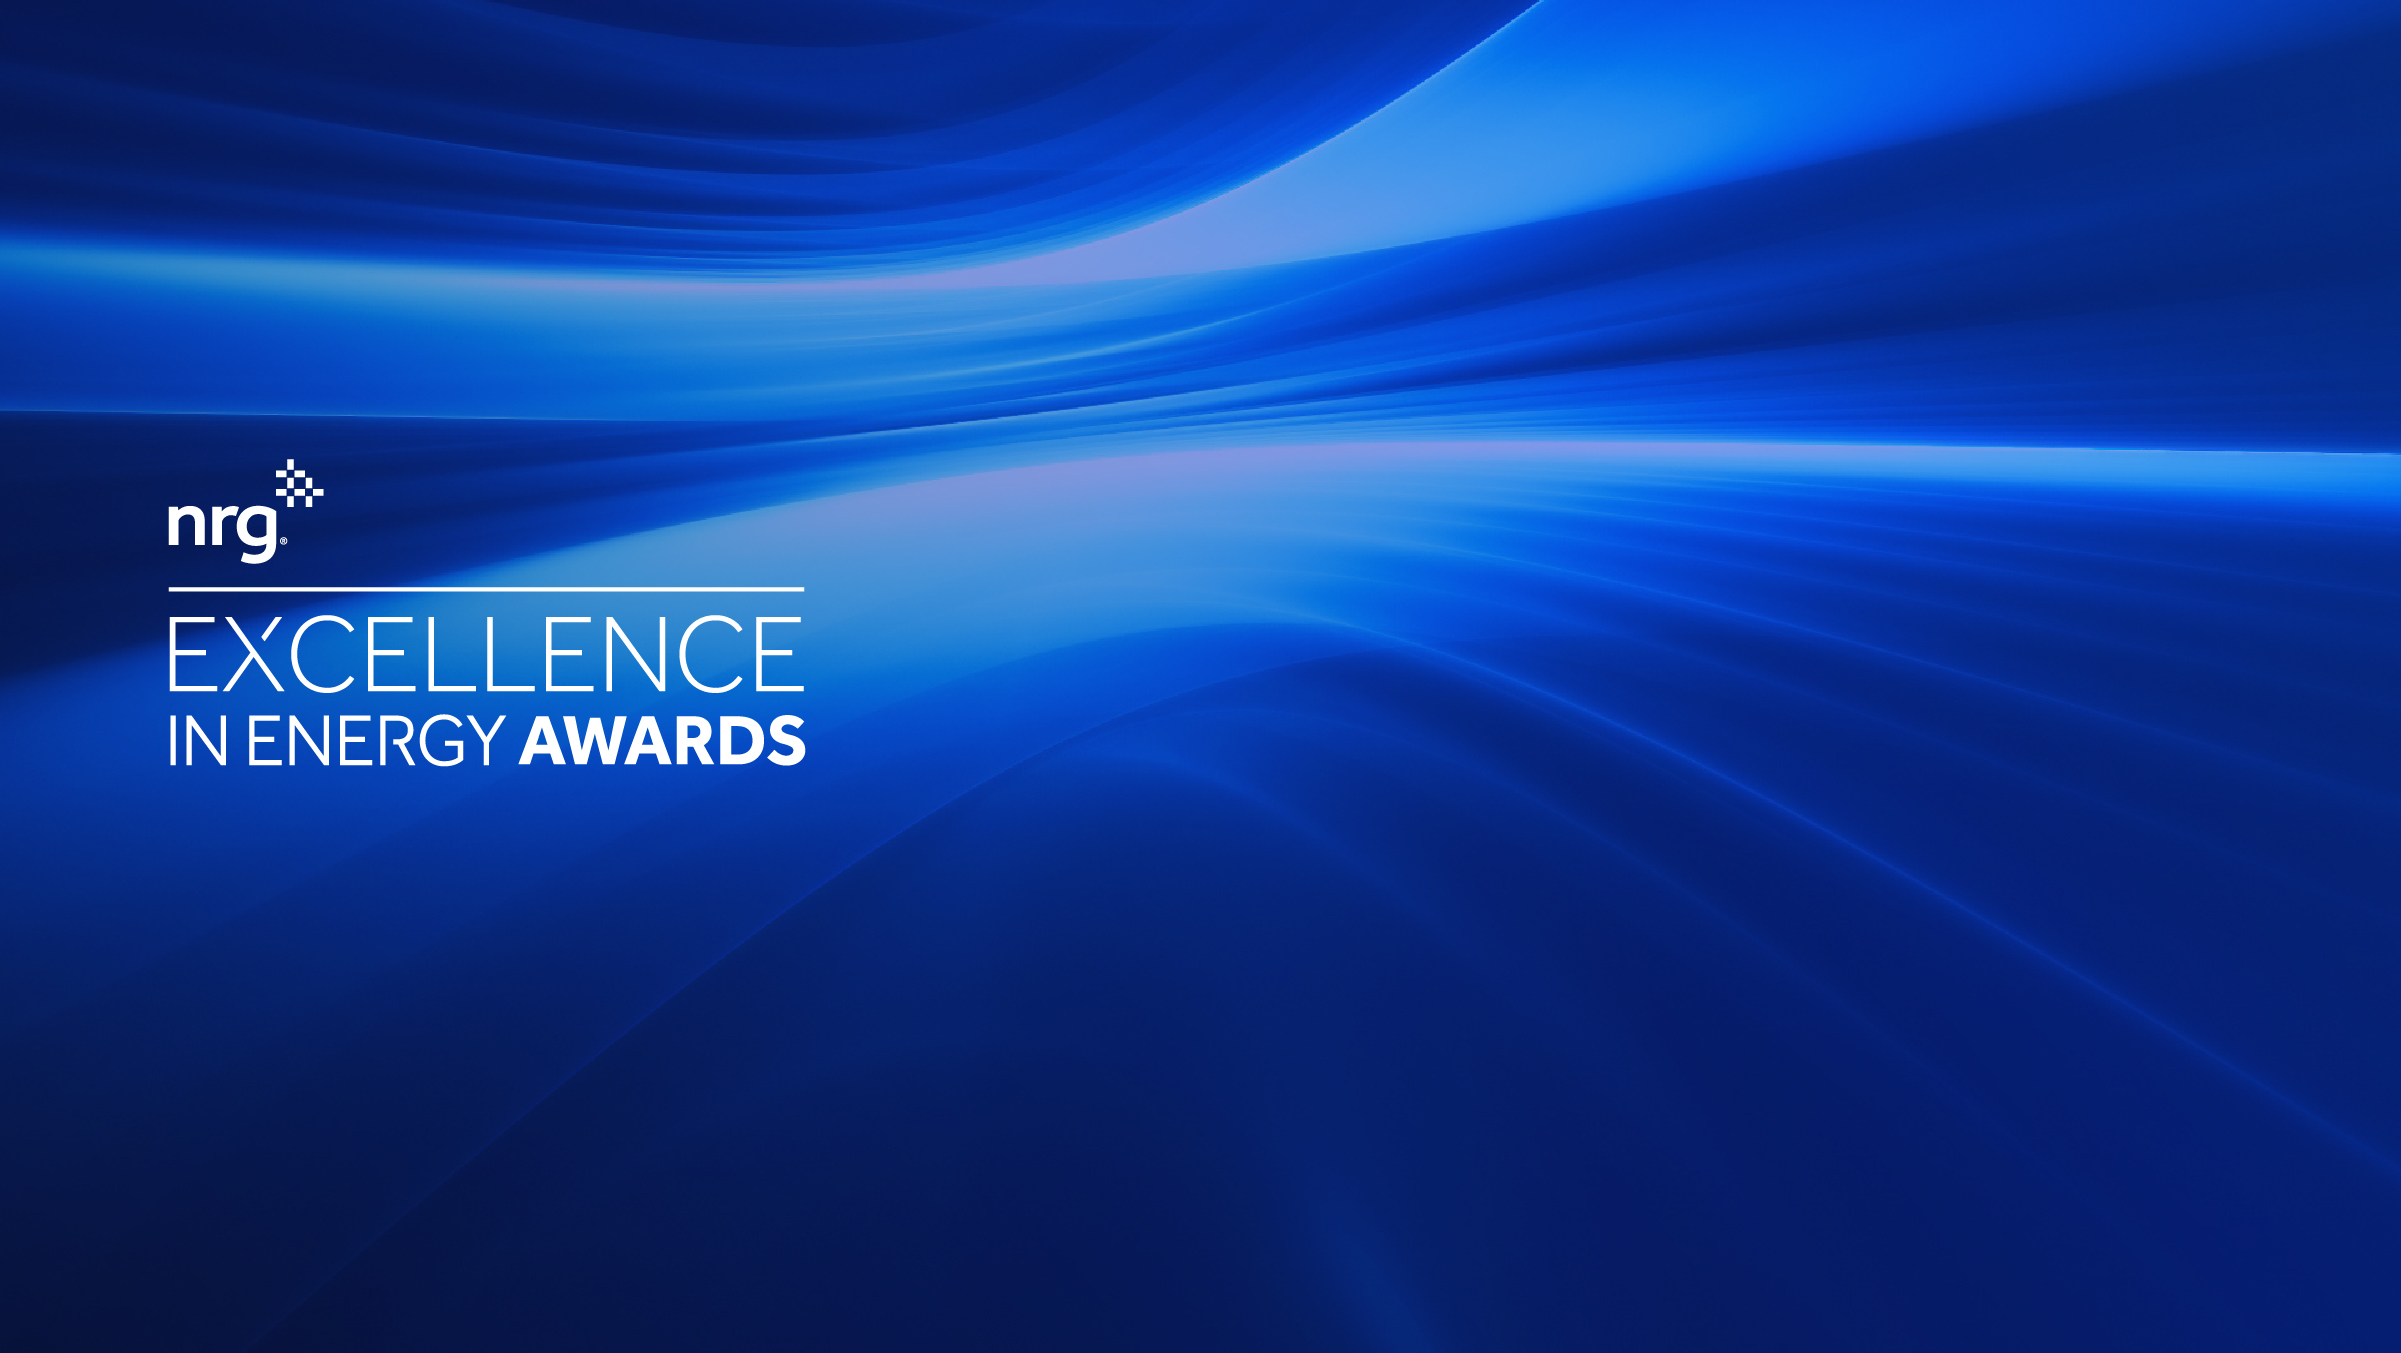 NRG Excellence in Energy Awards return for year three | NRG Energy